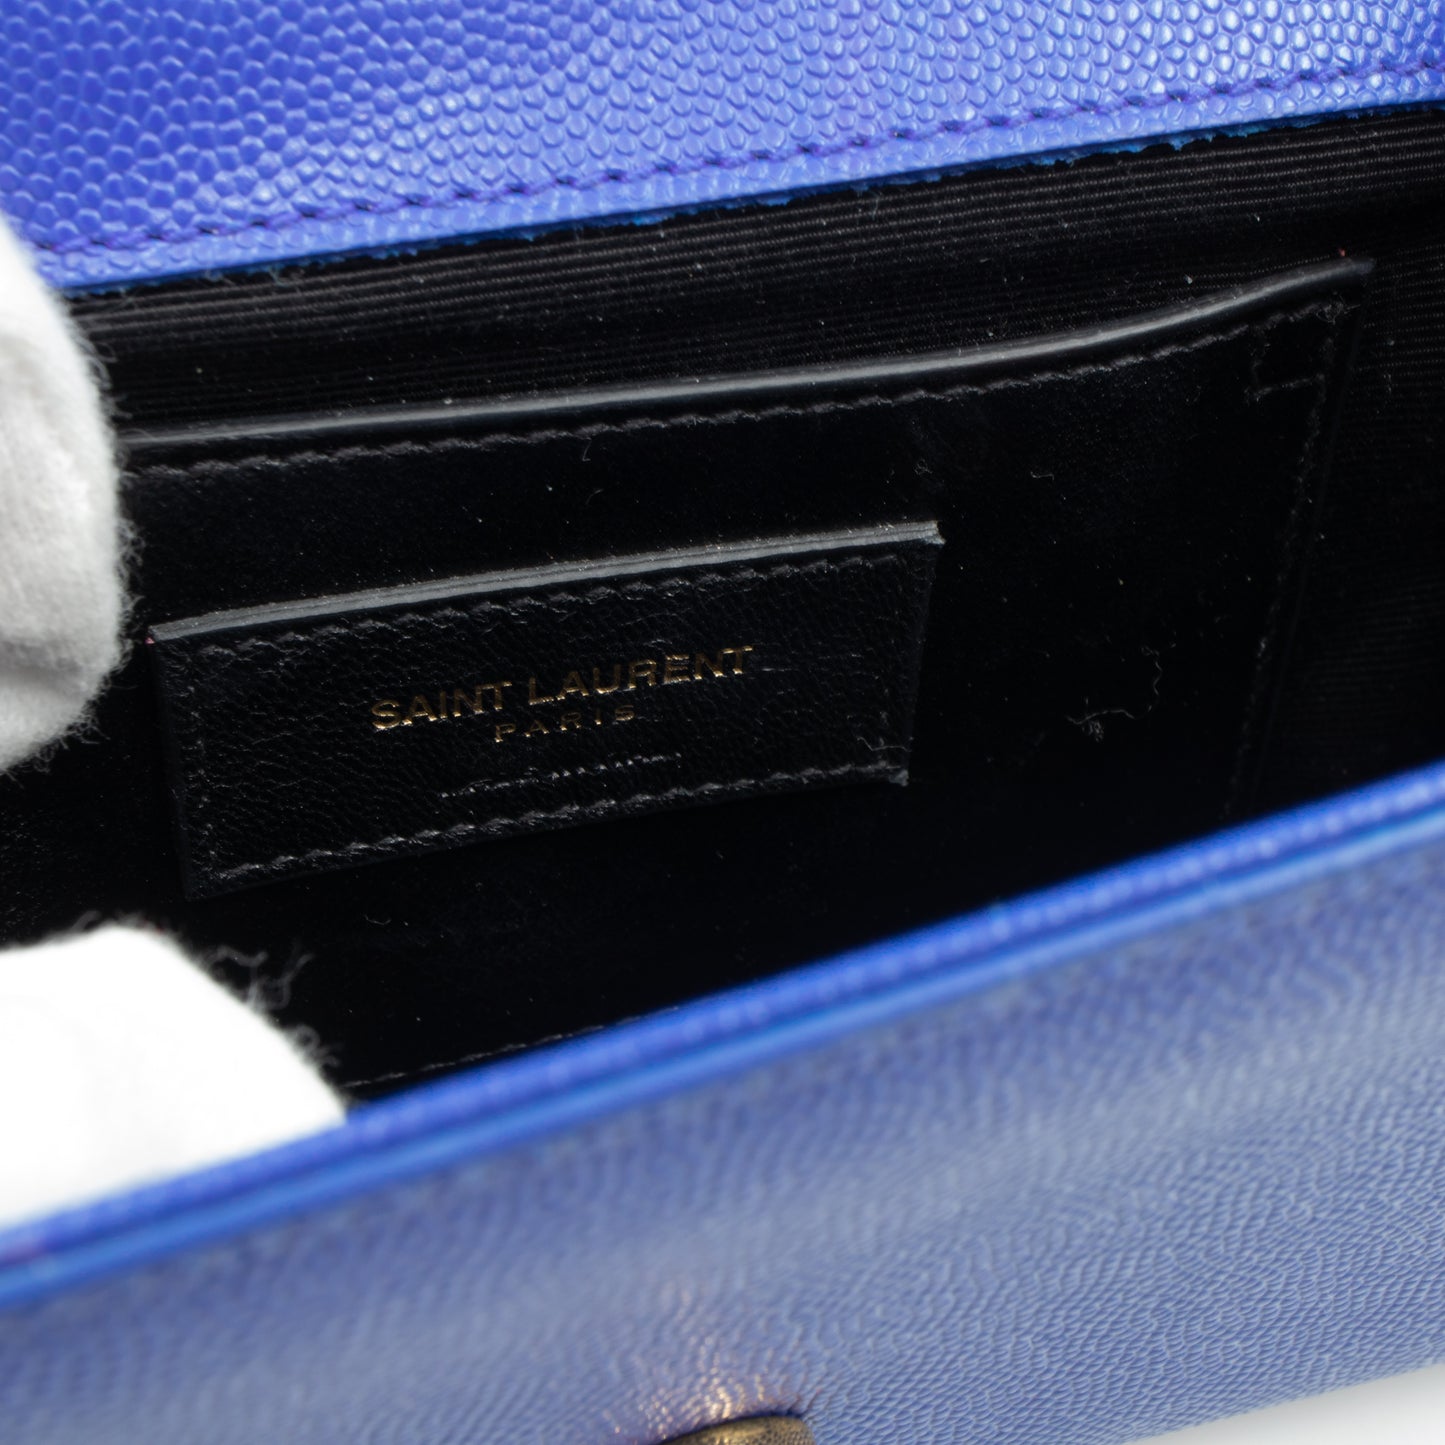 Monogram Kate Small Royal Blue Leather